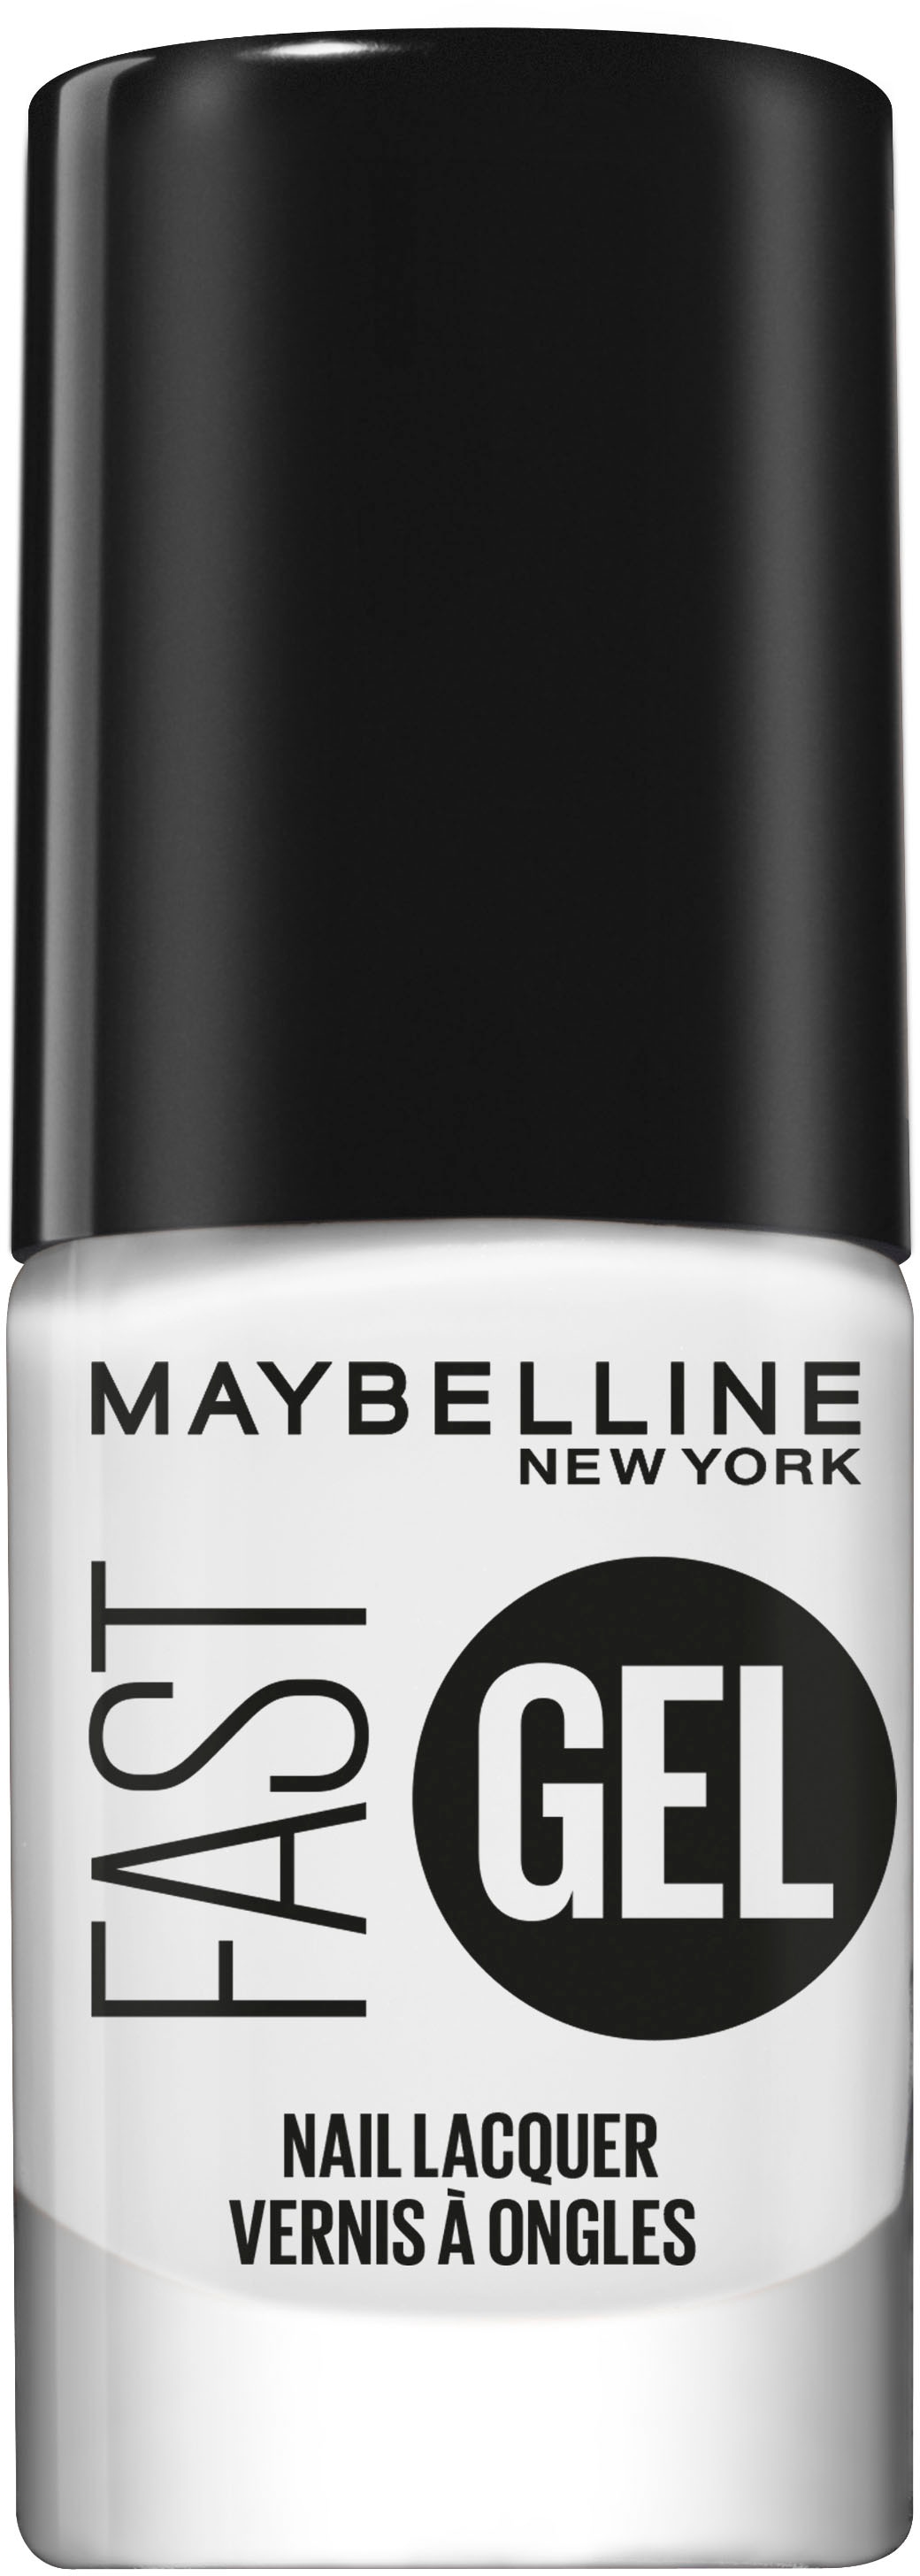 MAYBELLINE NEW Set« Kosmetik-Set »Fast Nagellack online bestellen Gel YORK